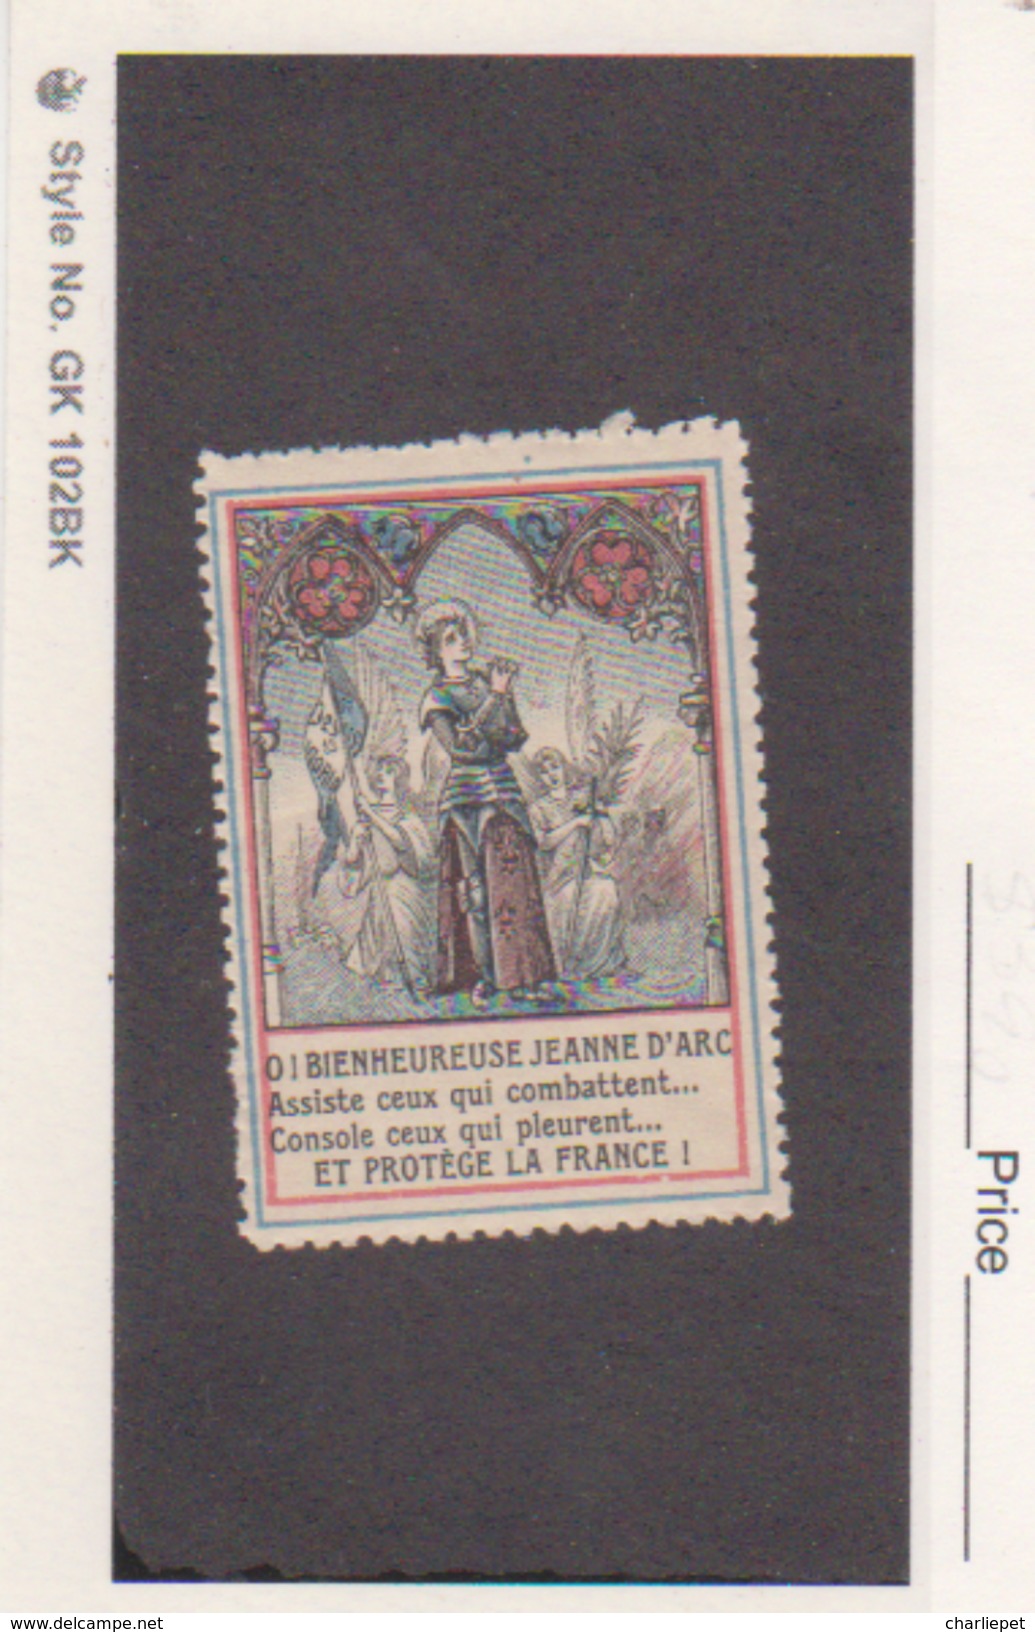 France WWI Jeanne D'Arc Vignette  Military Heritage Poster Stamp - Military Heritage